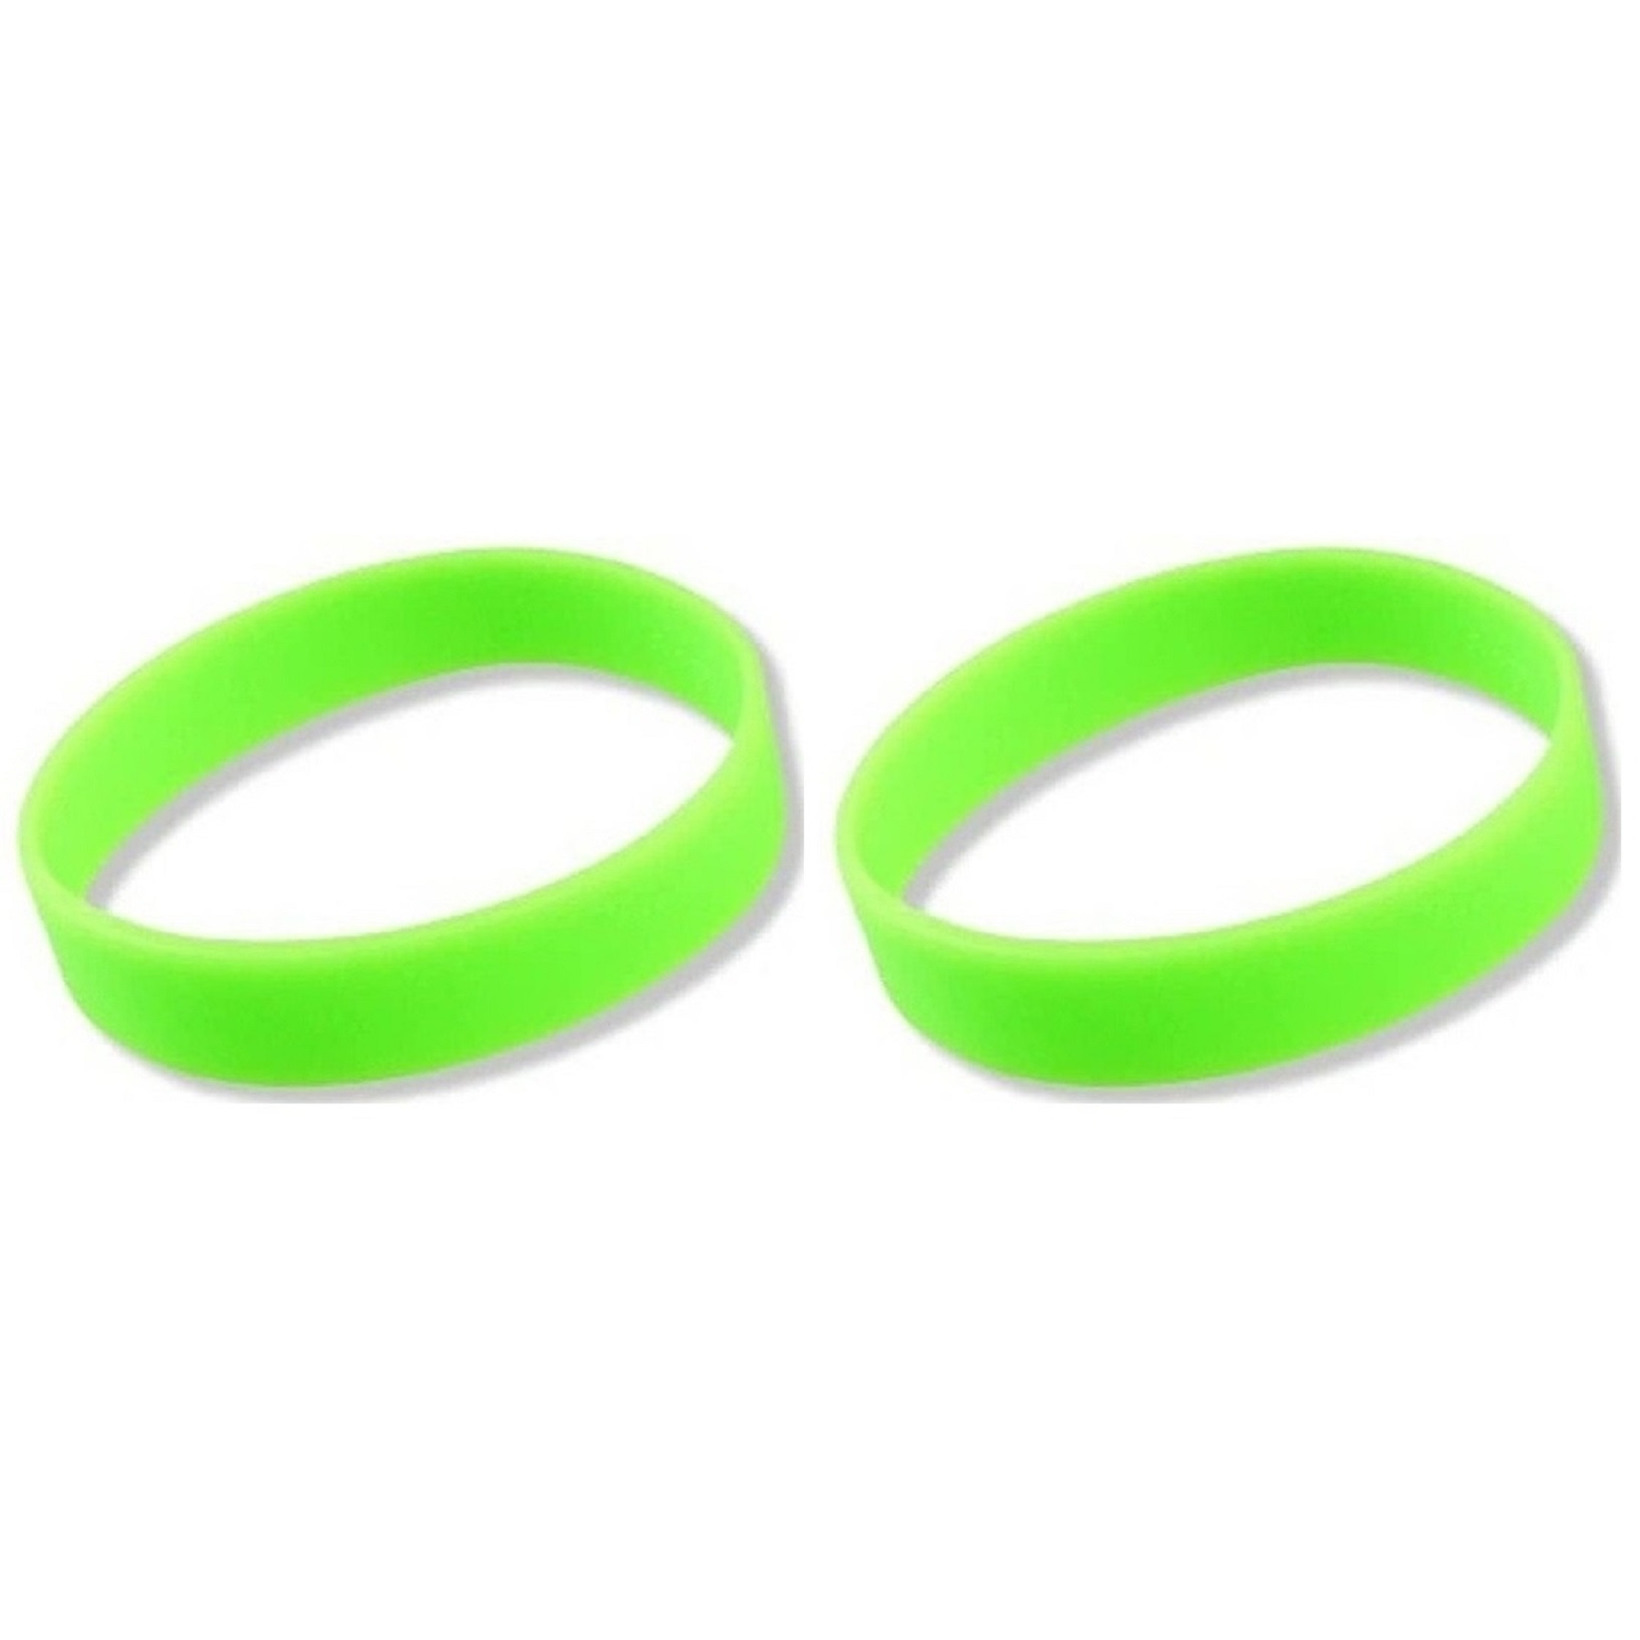 25x stuks siliconen armband neon groen